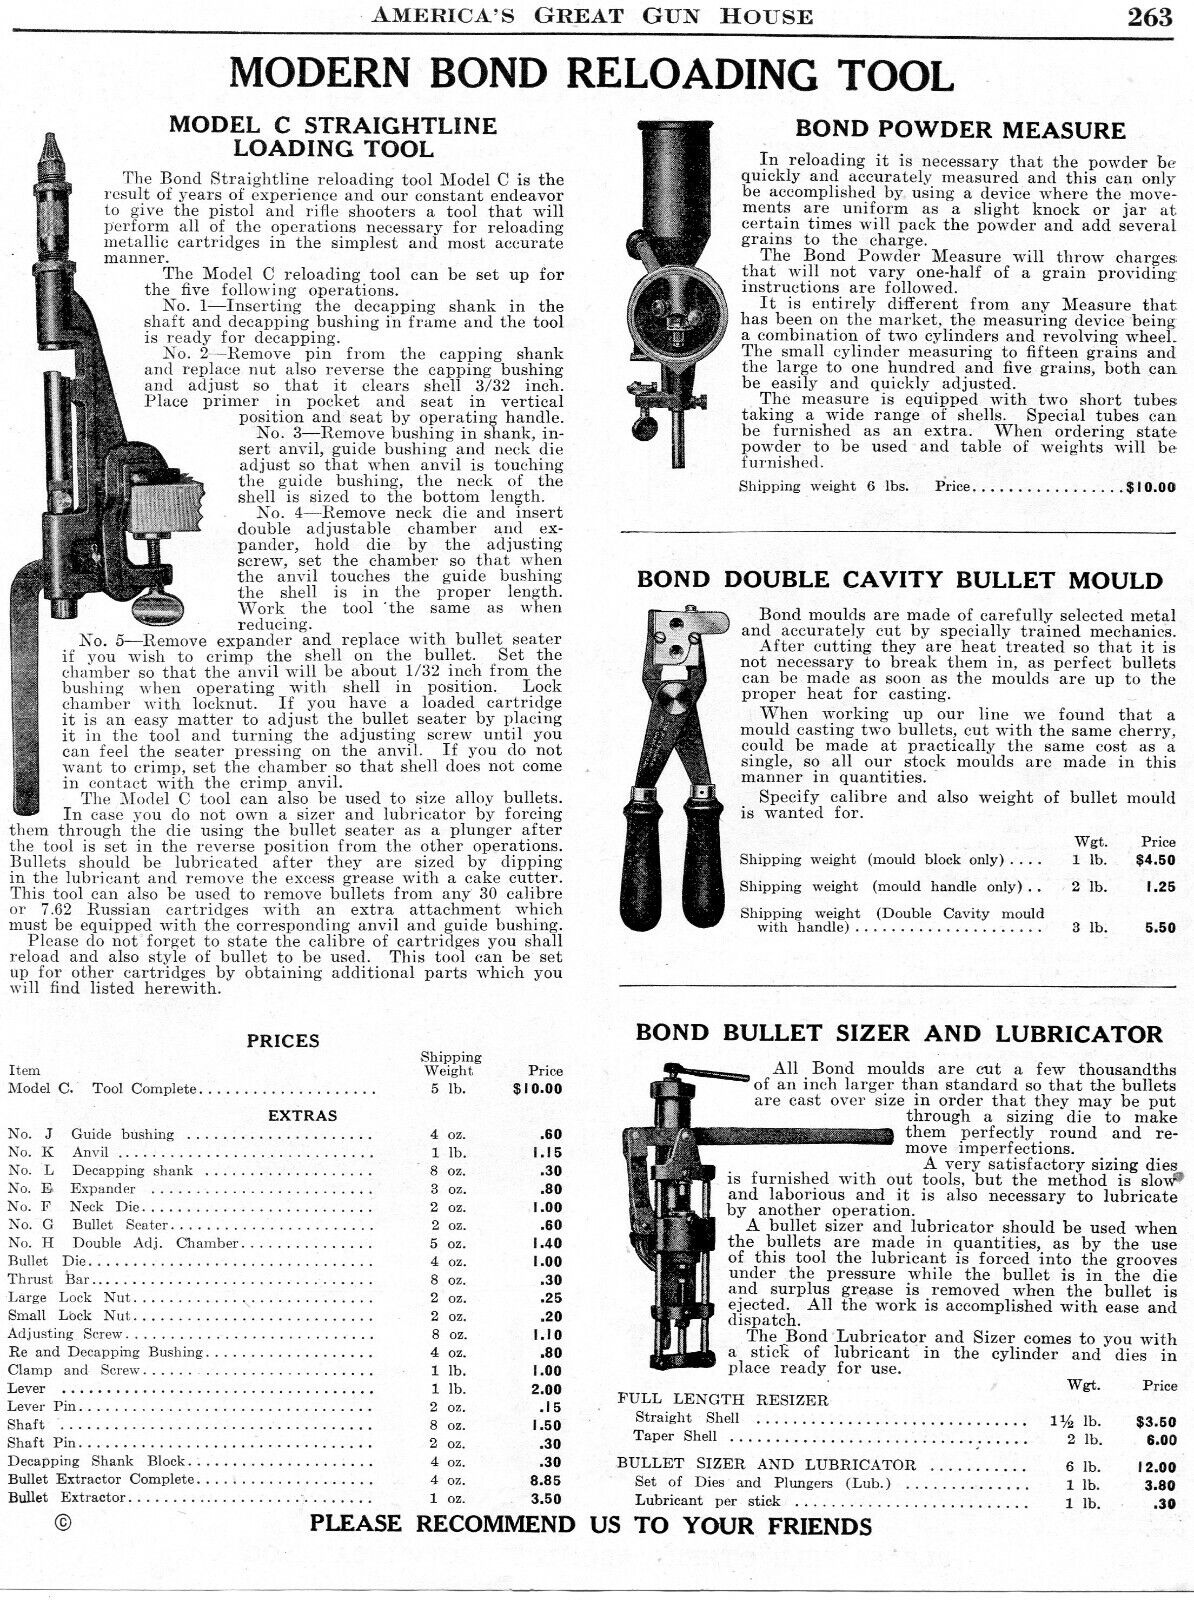 1943 Print Ad of Bond Model C Ammunition Reloading Tool, Bullet Sizer Lubricator